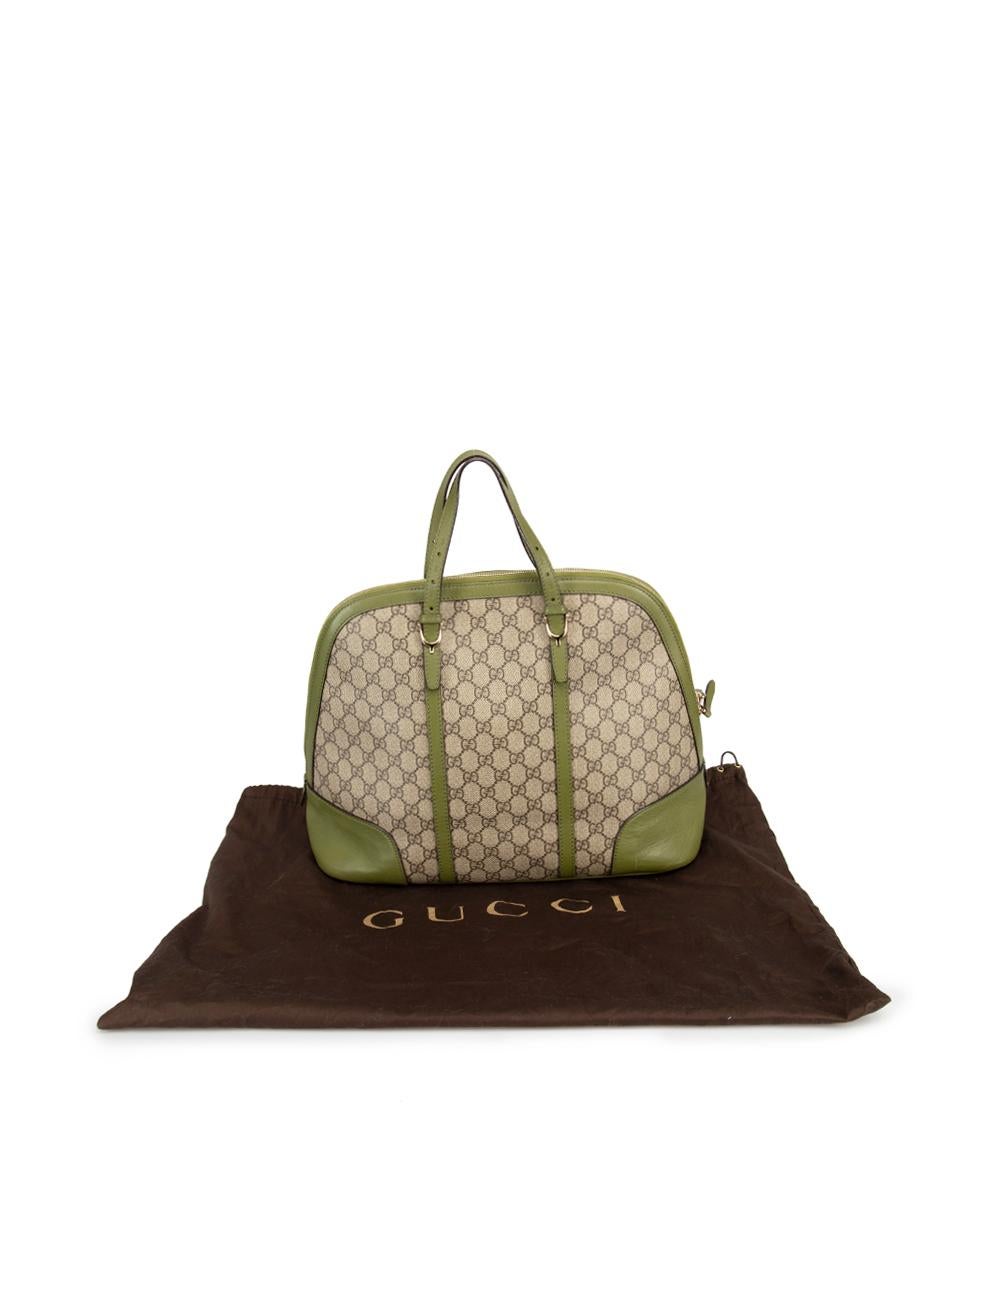 Gucci Women's Green Leather Trim GG Supreme Nice Dome Bag 6